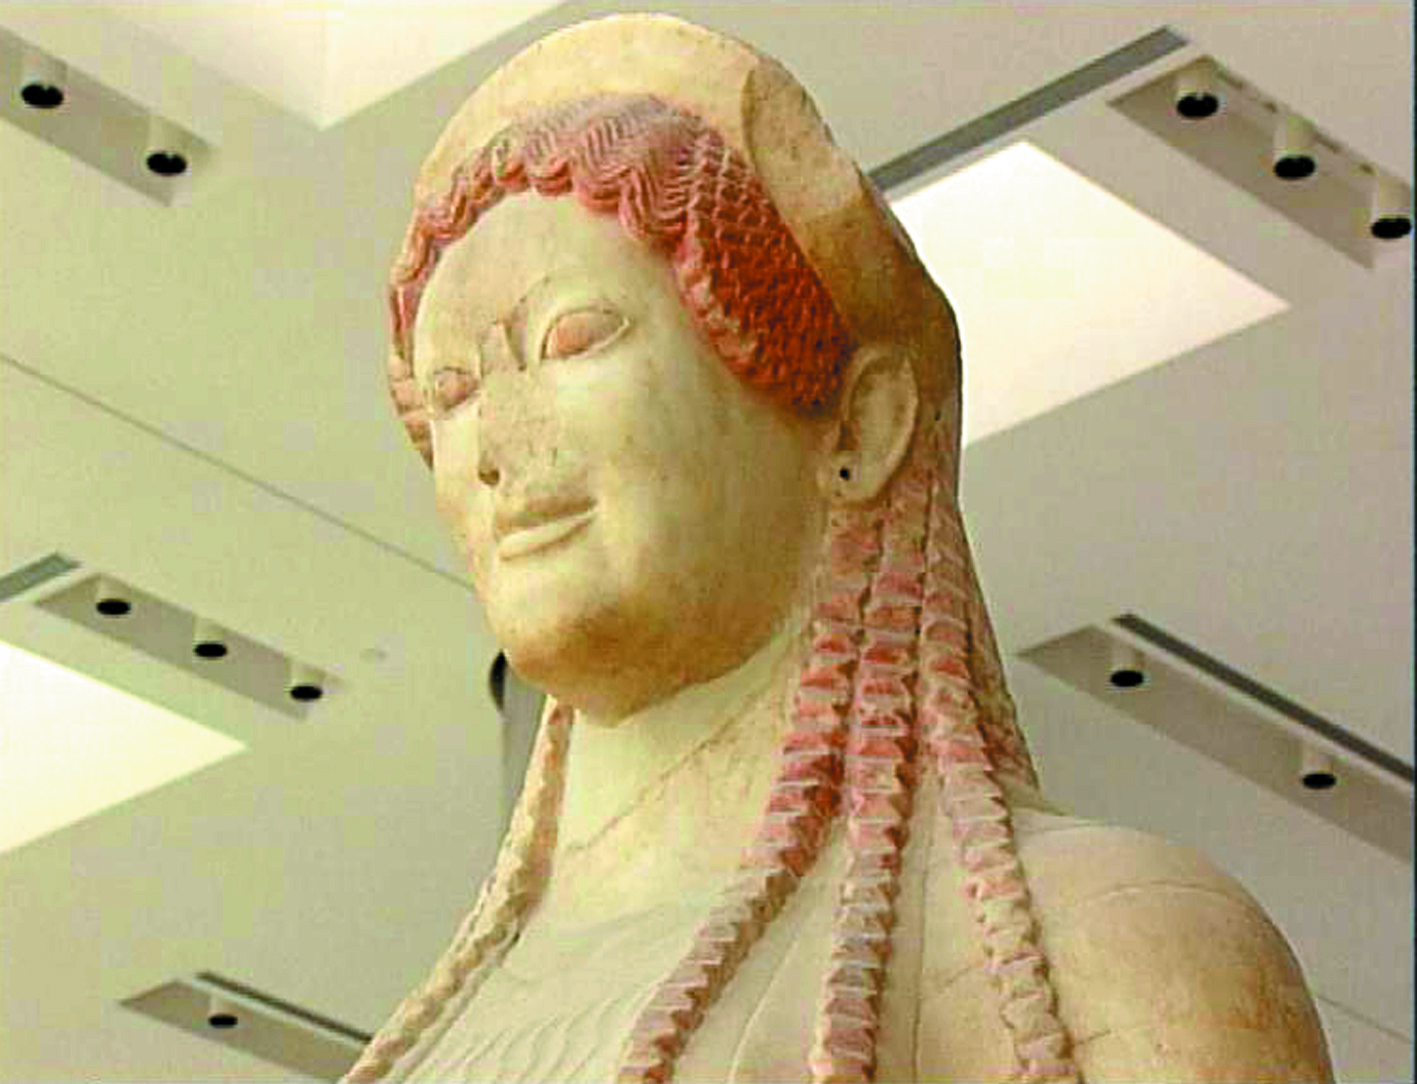 Sculpting the human figure. The female figure through the ancient greek sculpture